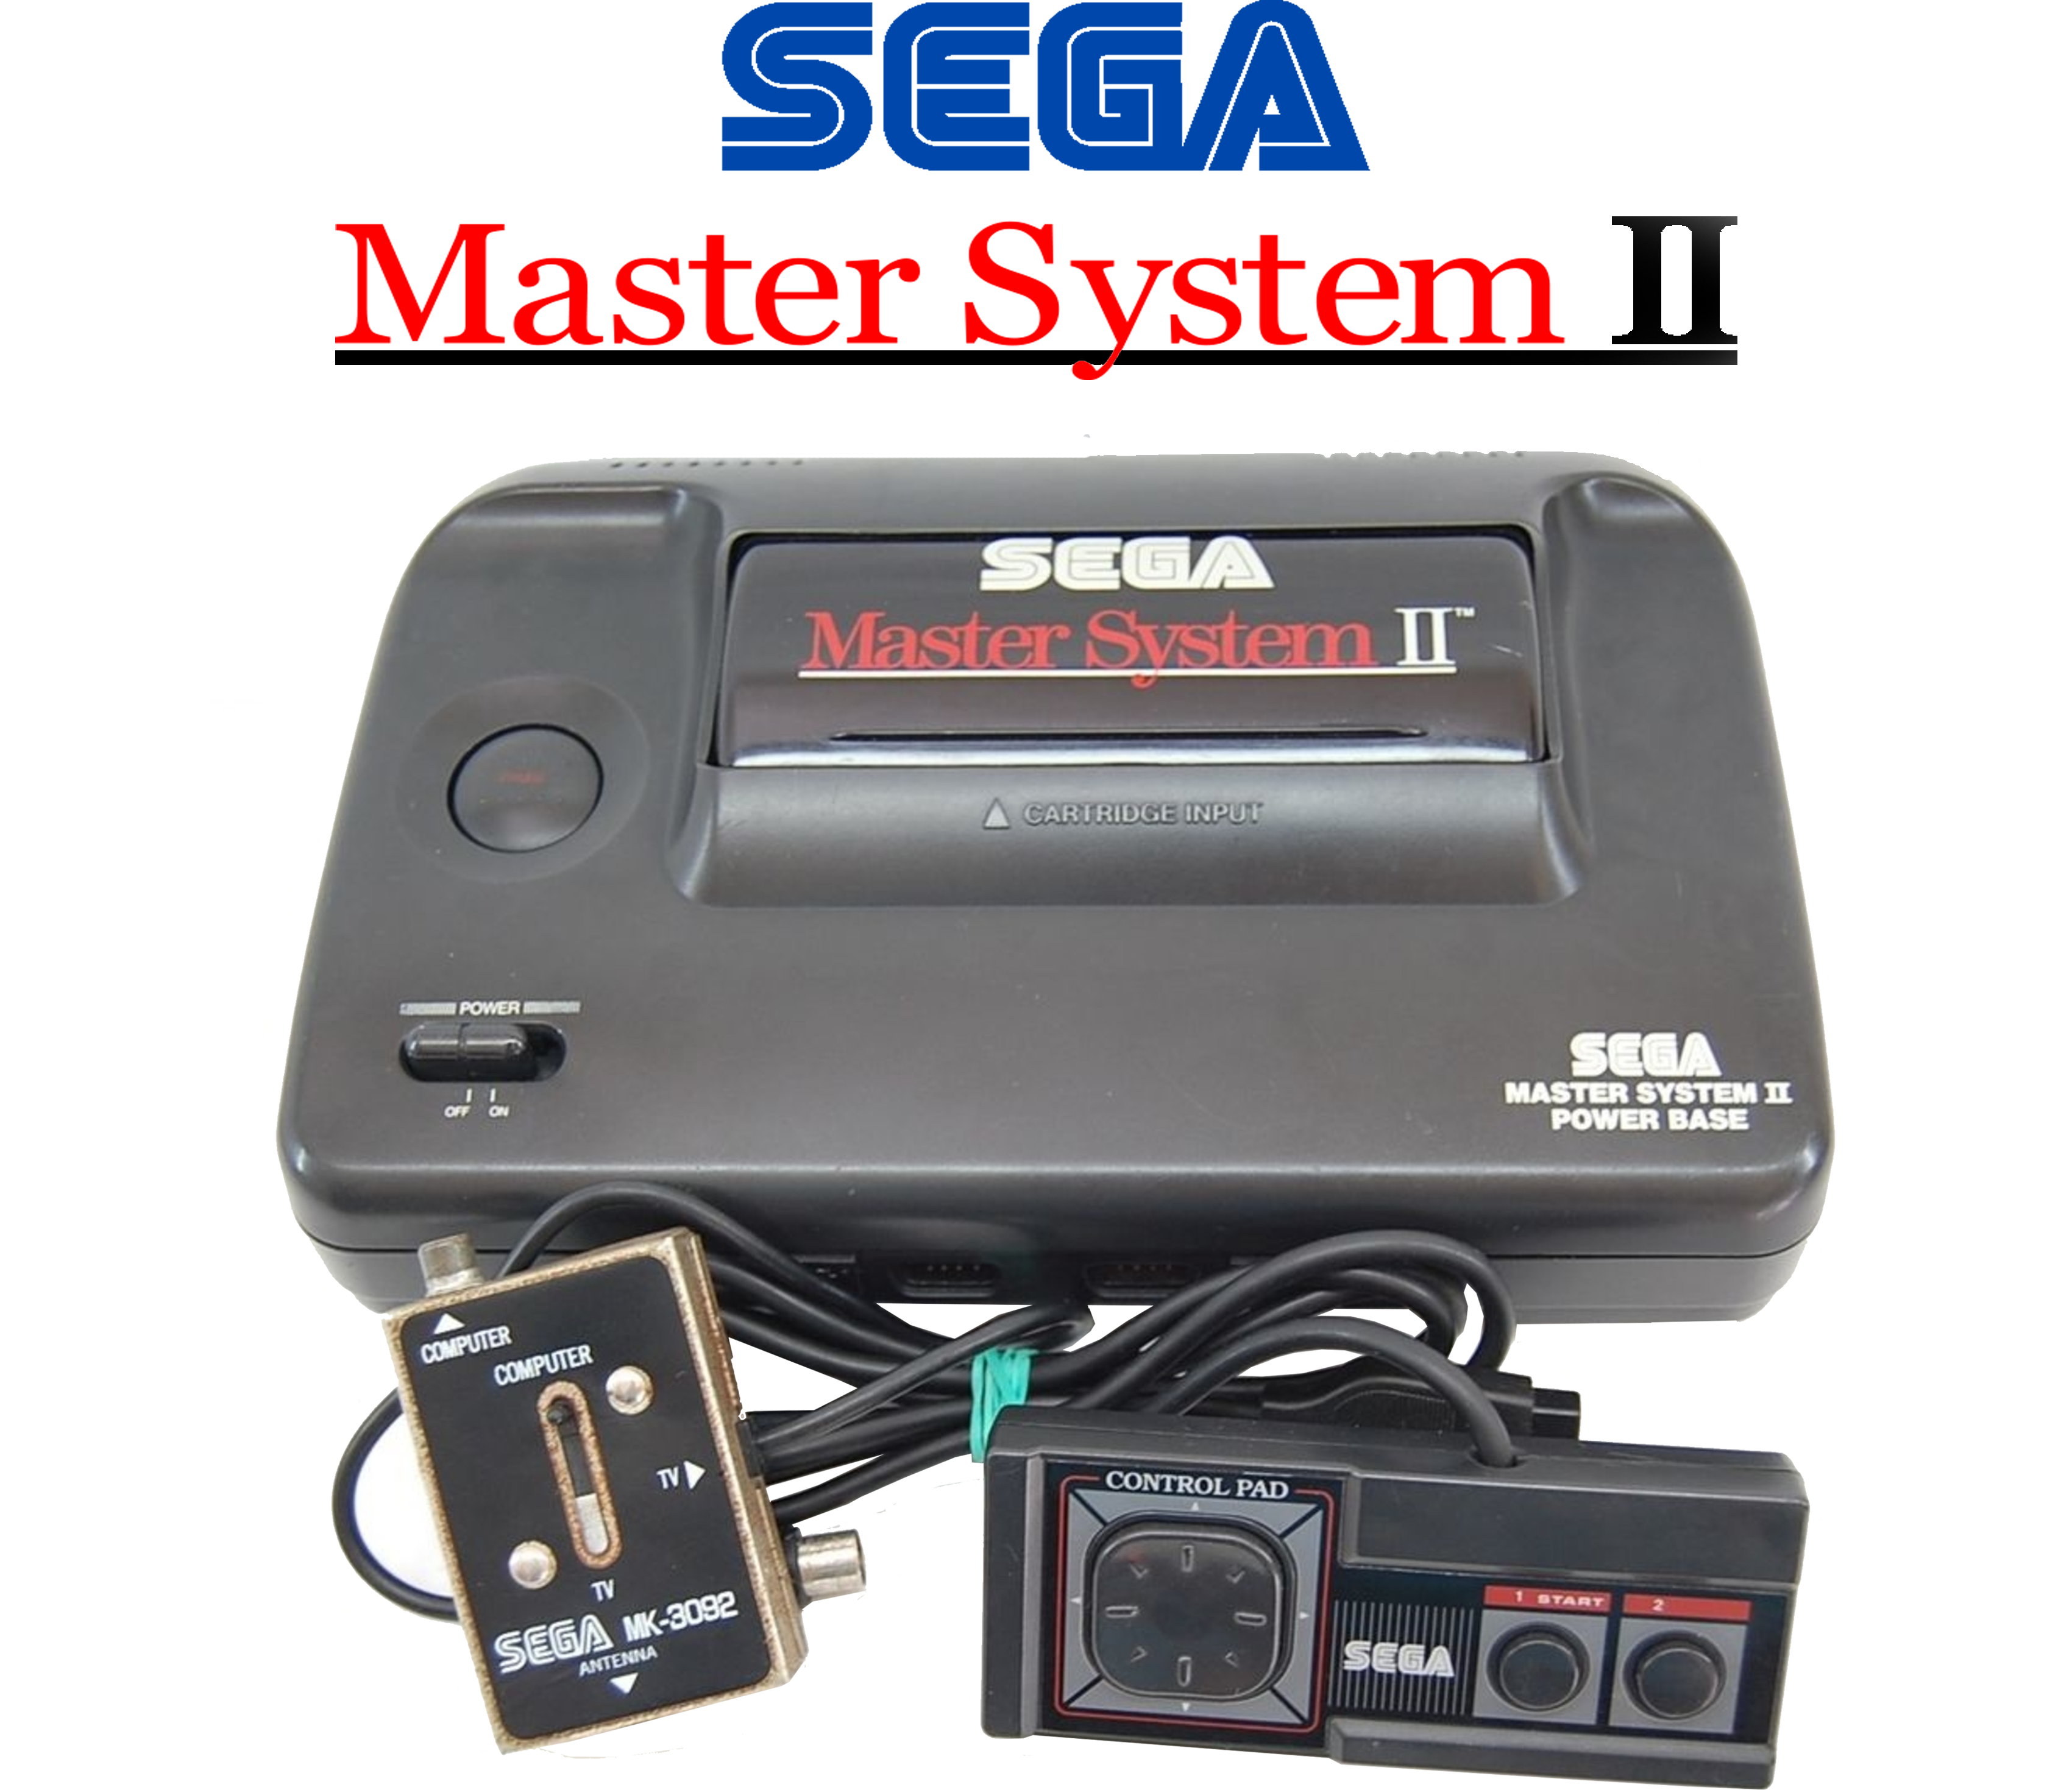 the sega master system